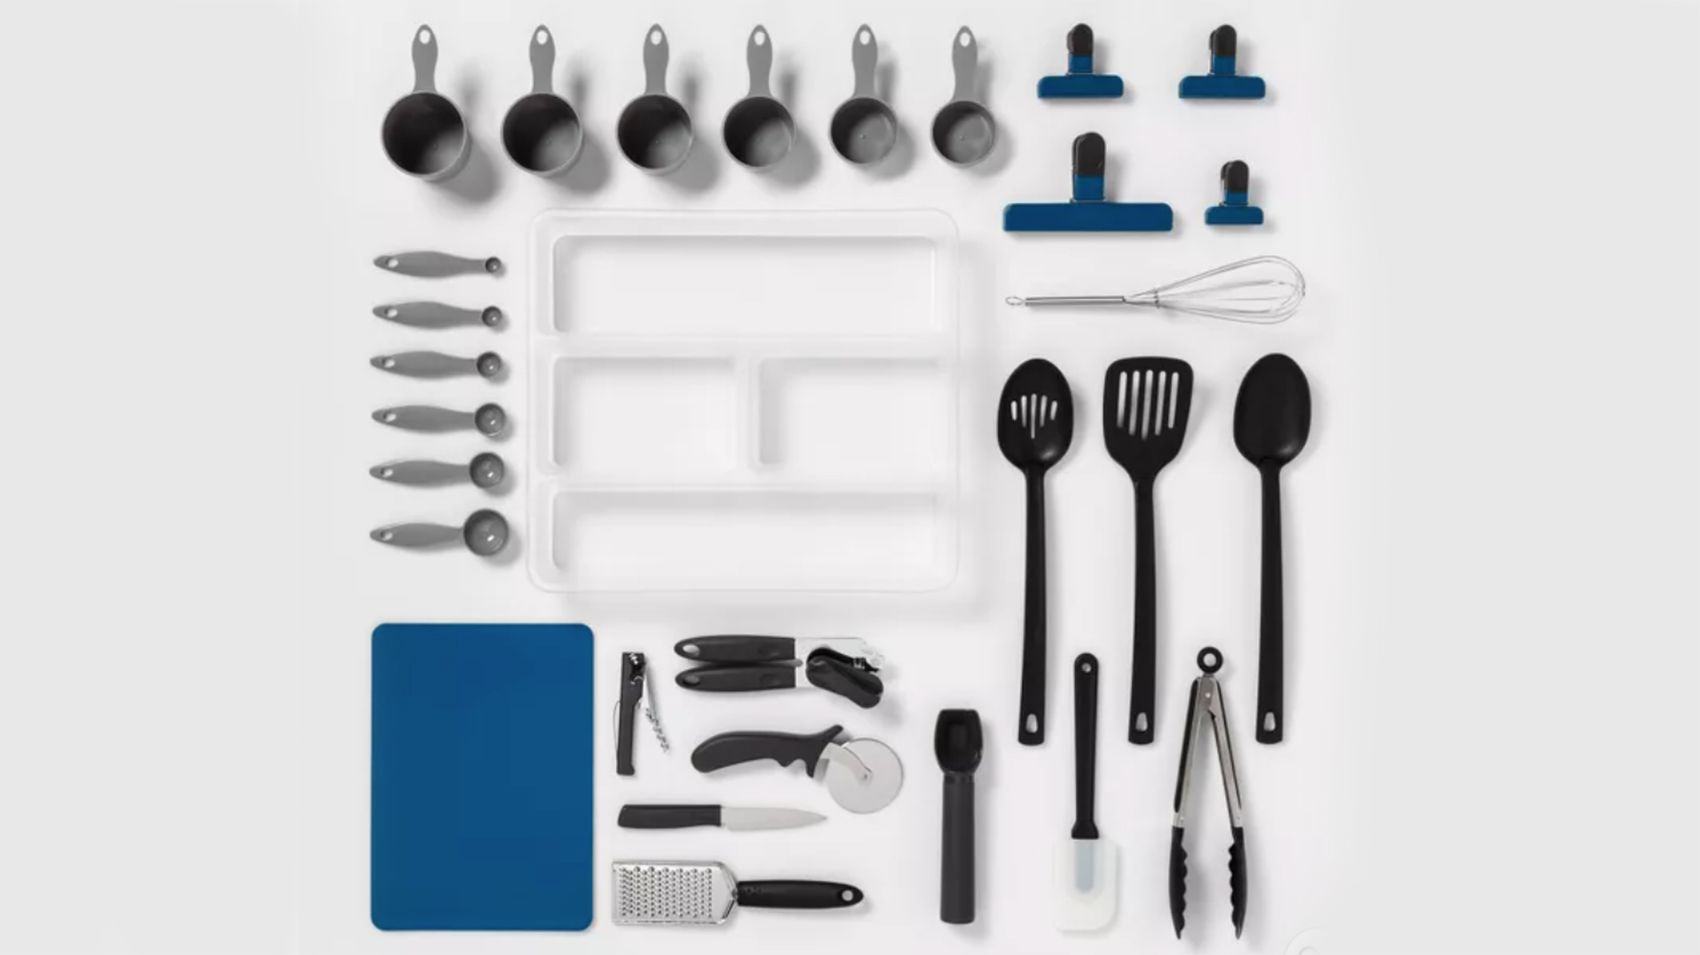 https://media.cnn.com/api/v1/images/stellar/prod/210806102039-kitchen-room-essentials-30pc-kitchen-utensil-set.jpg?q=w_1700,h_955,x_0,y_0,c_fill